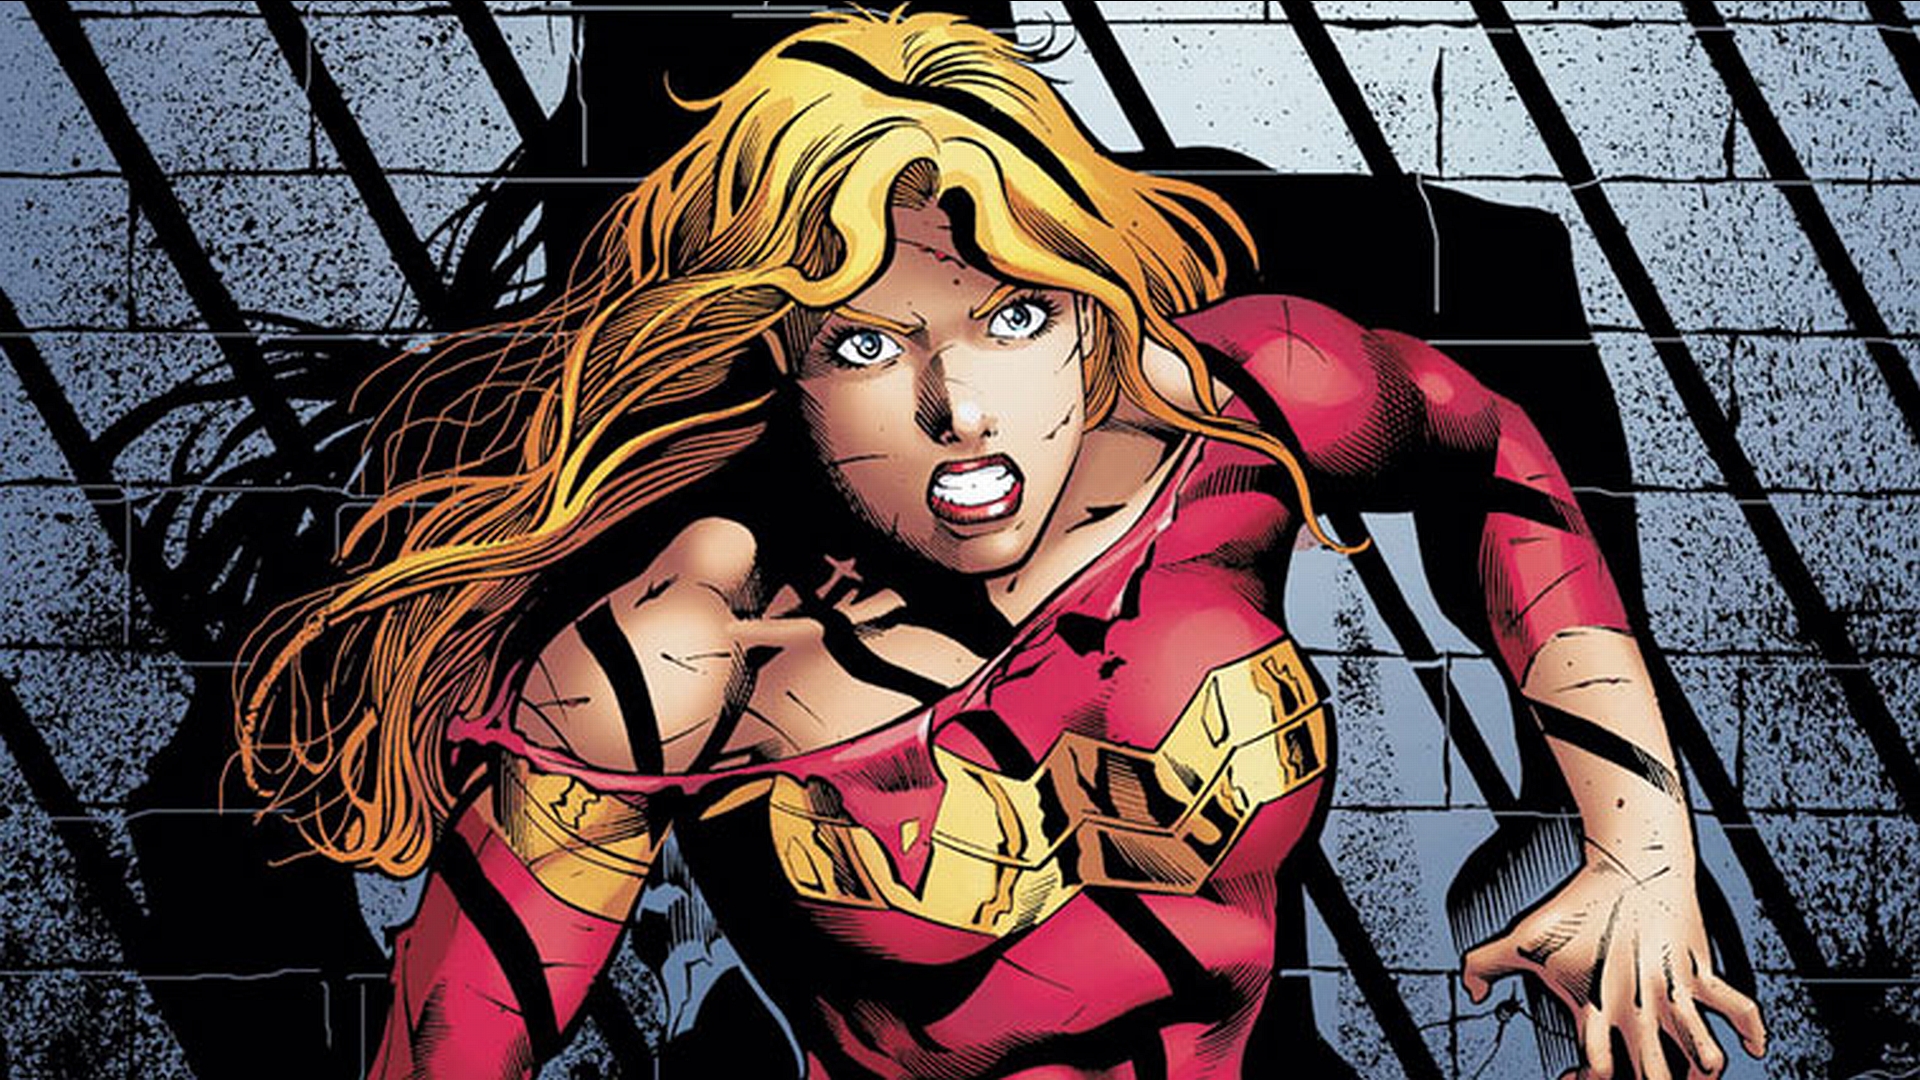 Teen Titans character Cassandra Sandsmark, aka Wonder Girl, from DC Comics, is portrayed.